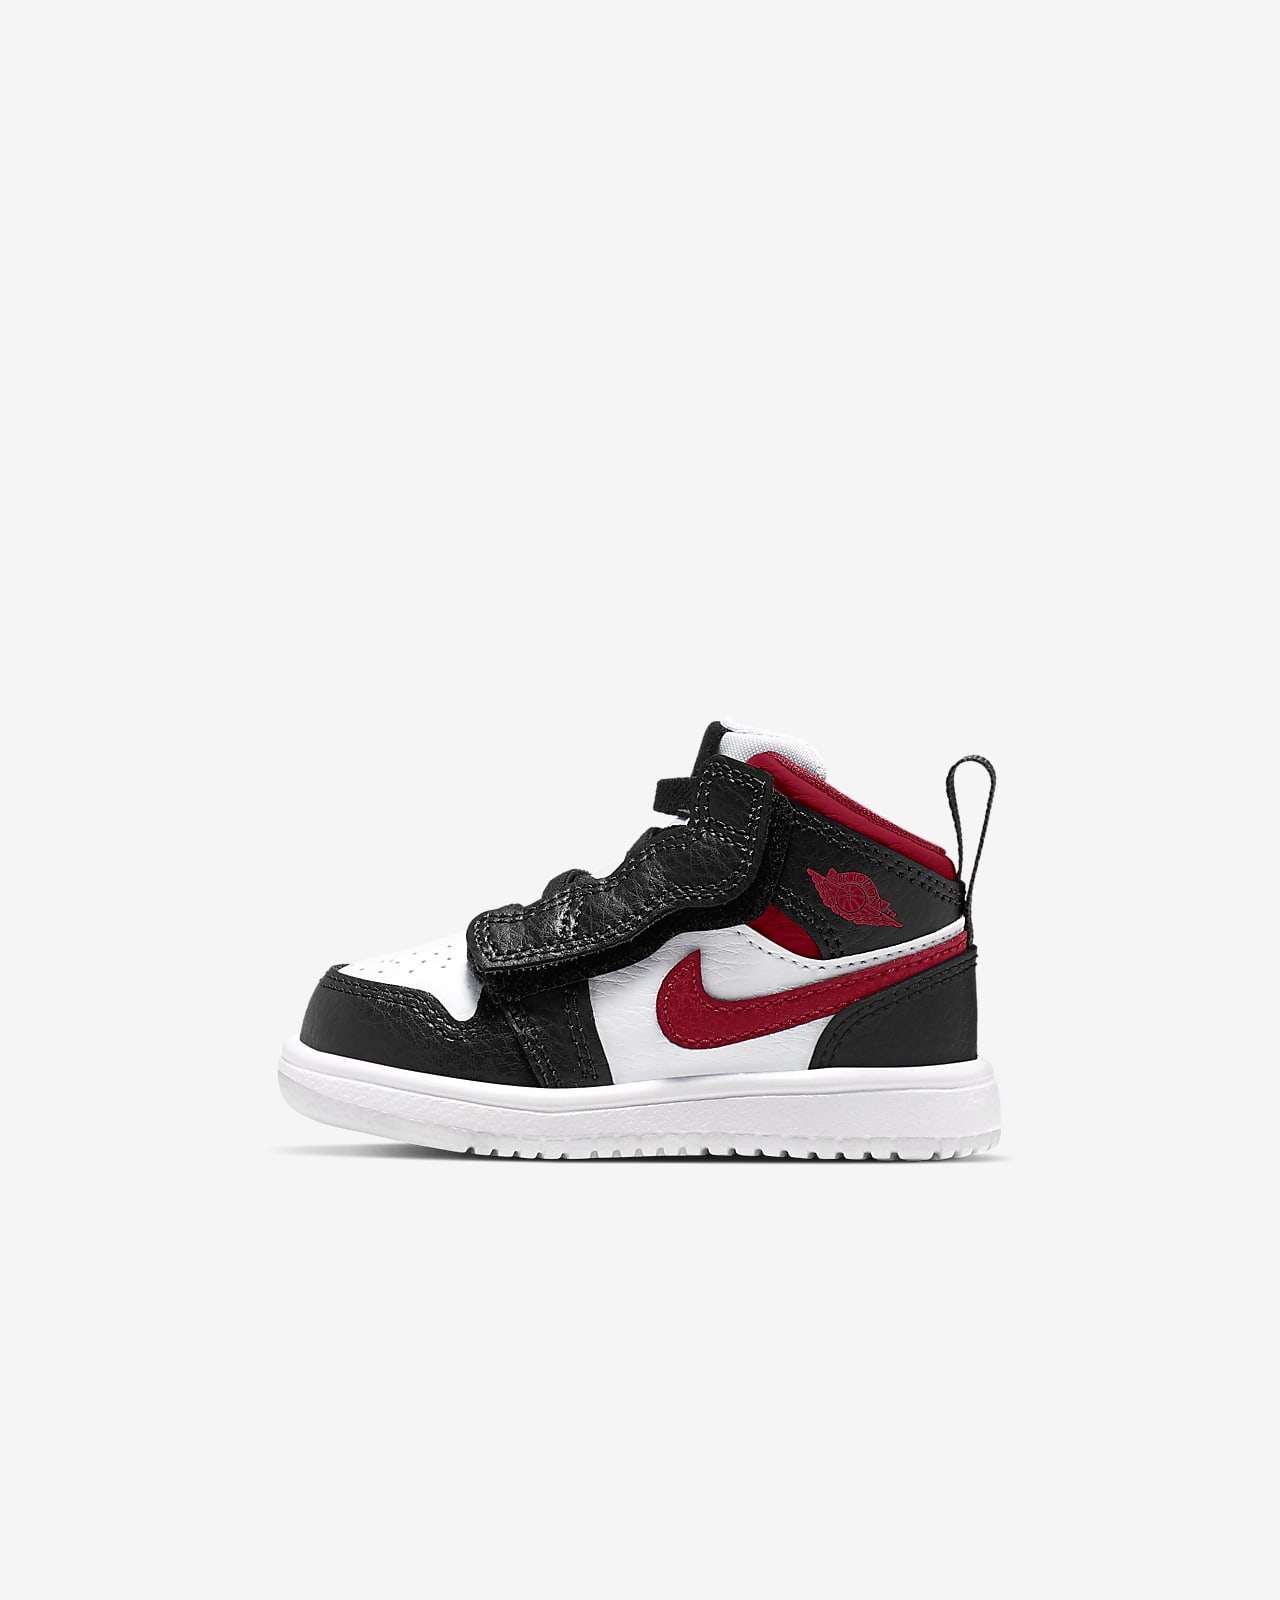 Jordan 1 Mid Infant/Toddler Shoe. Nike JP